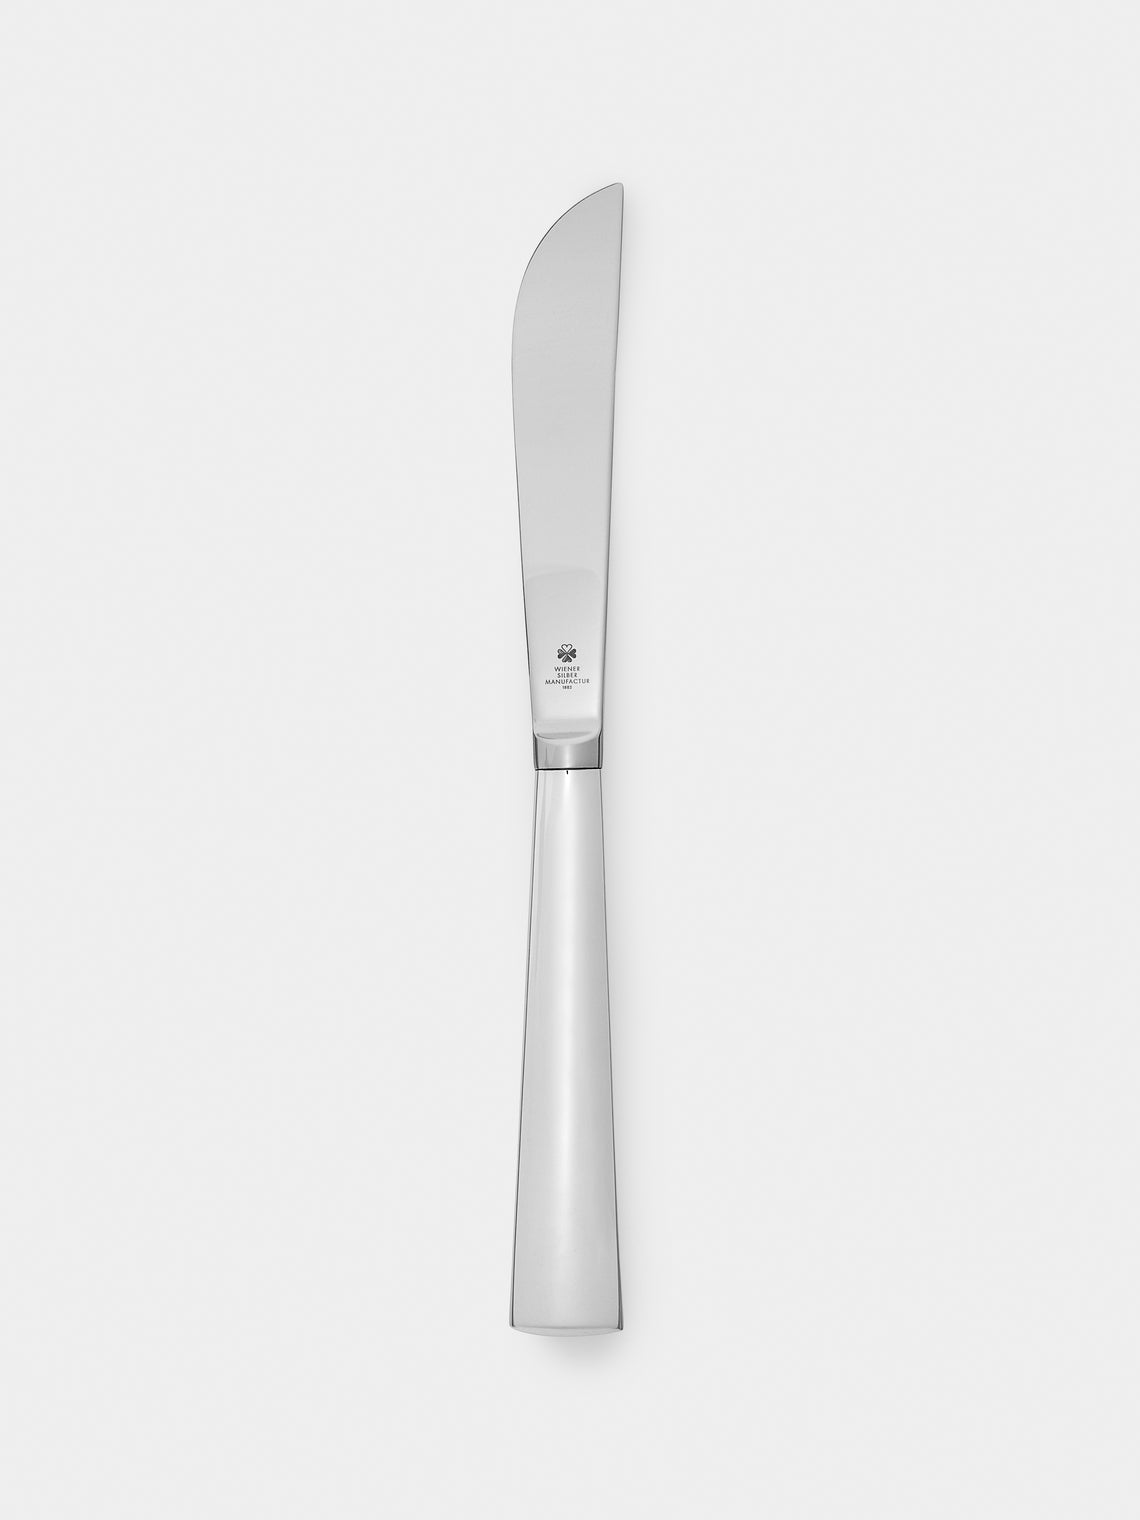 Wiener Silber Manufactur - Josef Hoffmann 135 Silver-Plated Dessert Knife - Silver - ABASK - 